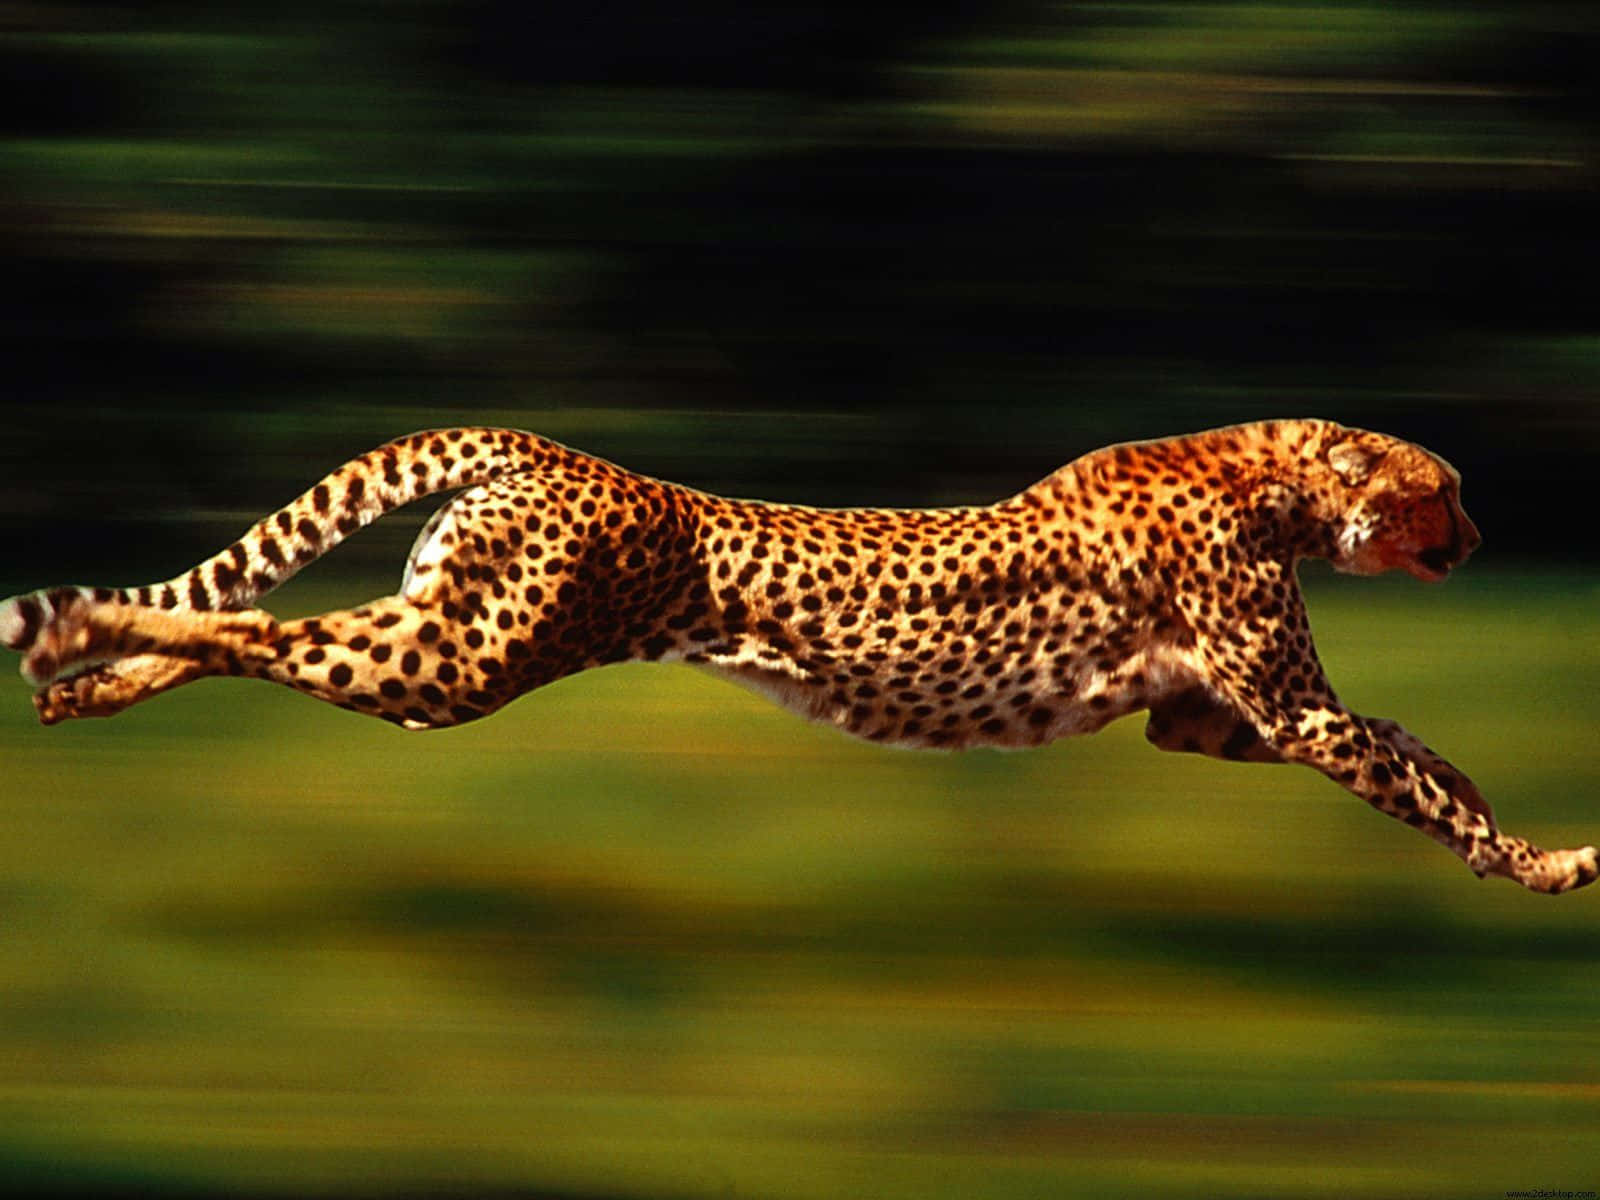 'The Sleek and Powerful Cheetah'